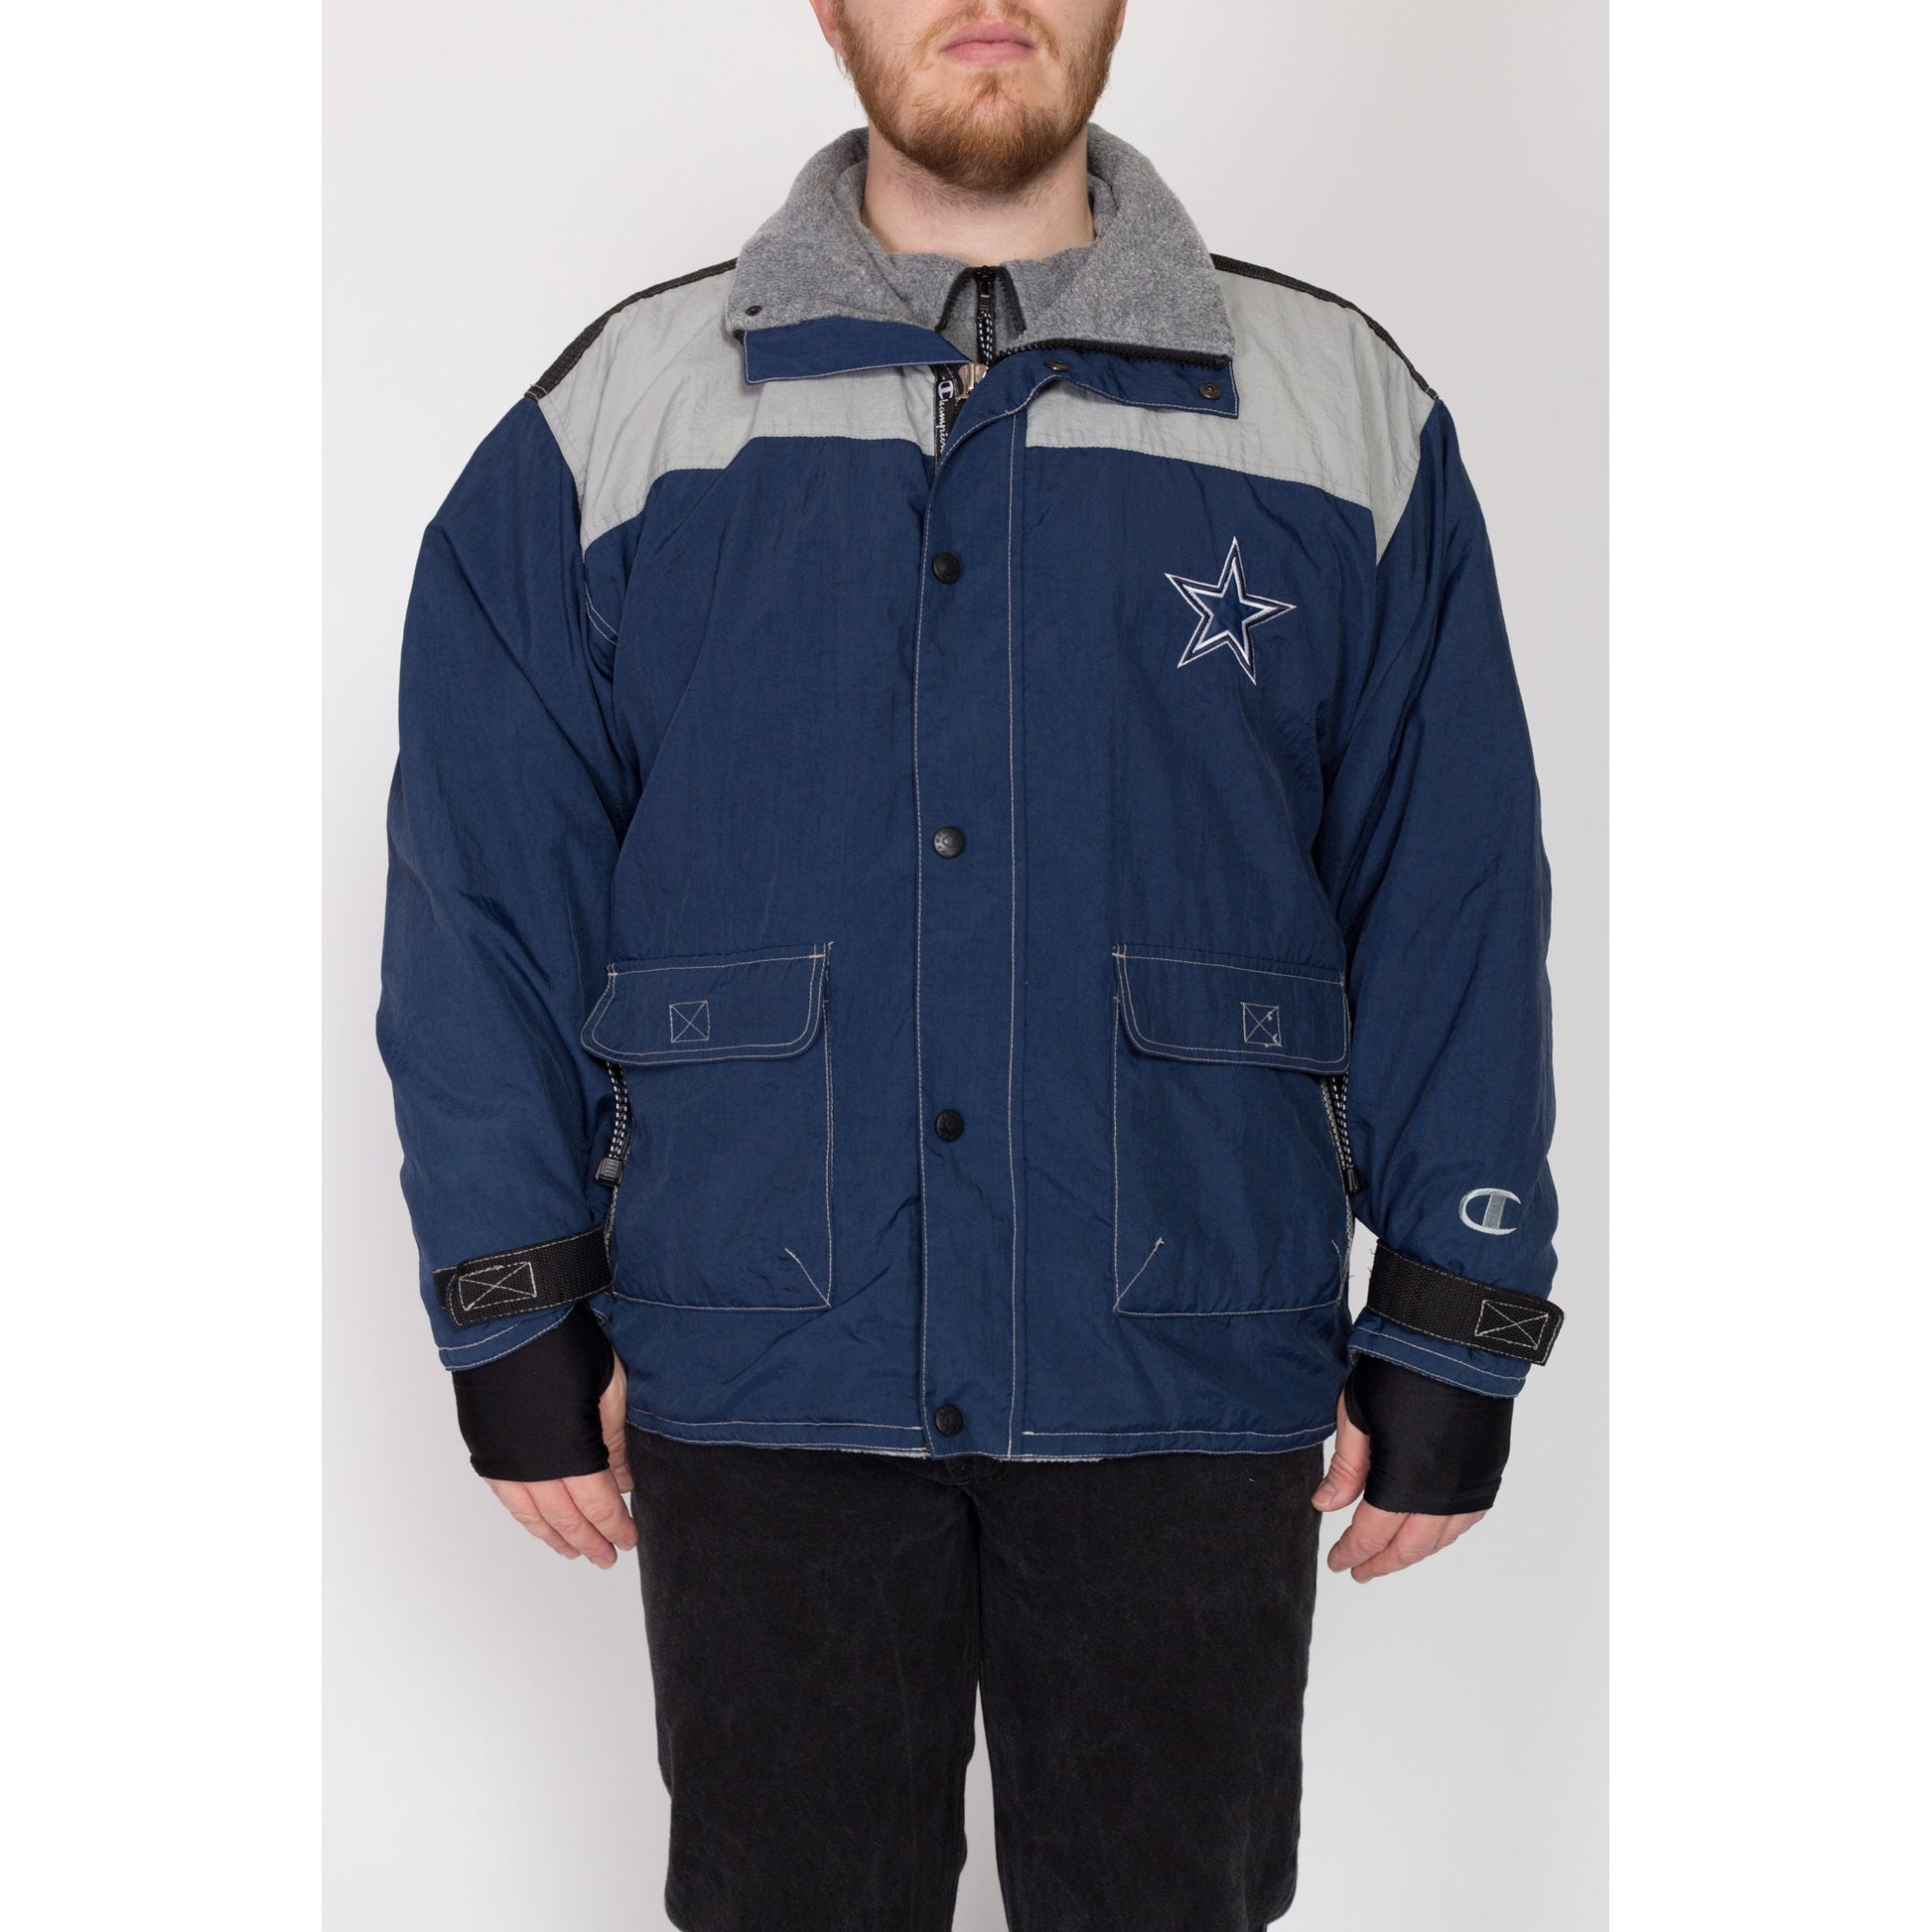 2X 90s Dallas Cowboys Champion Jacket | Vintage NFL Football Zip Up Windbreaker Winter Coat